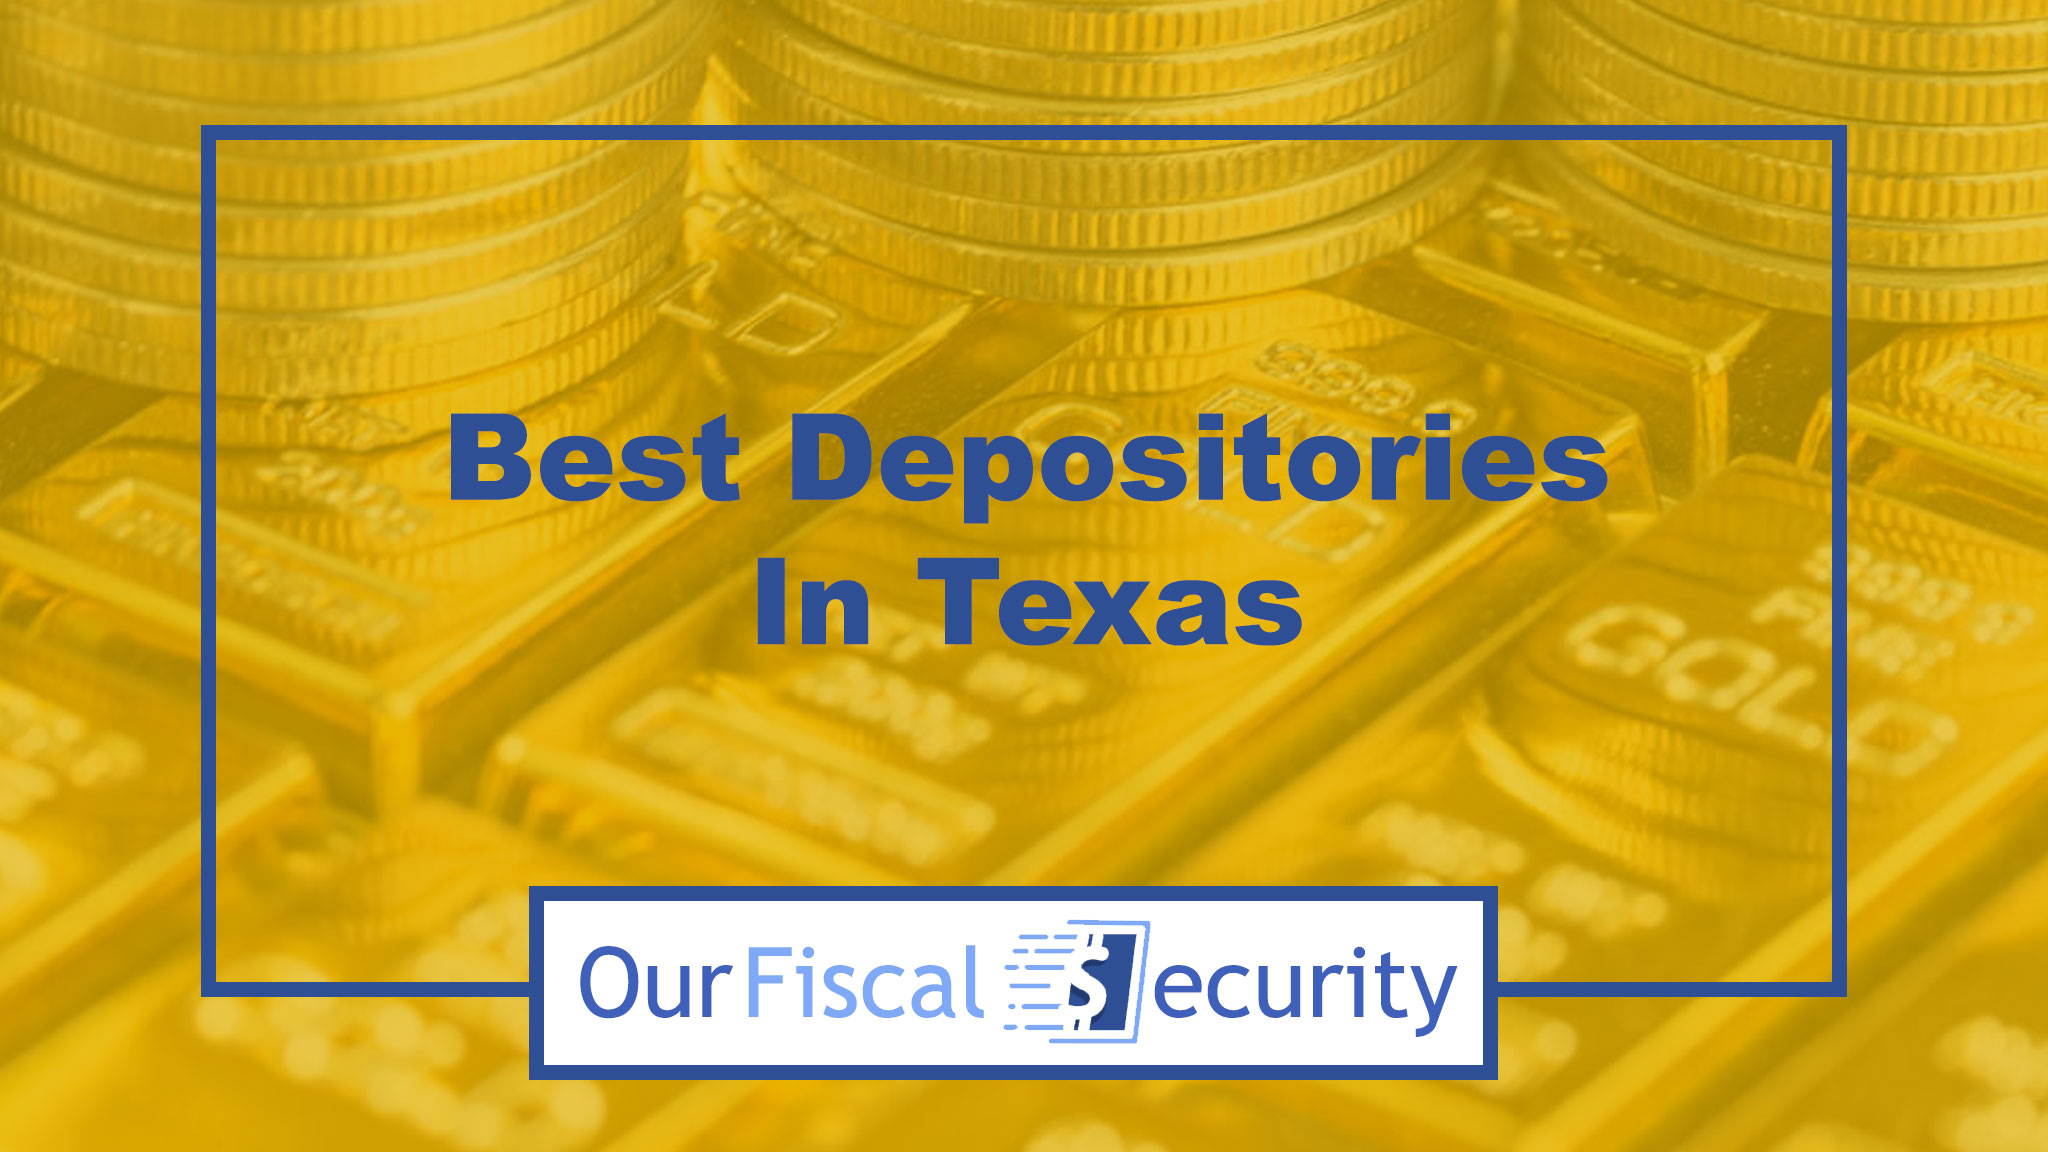 Best Depositories In Texas